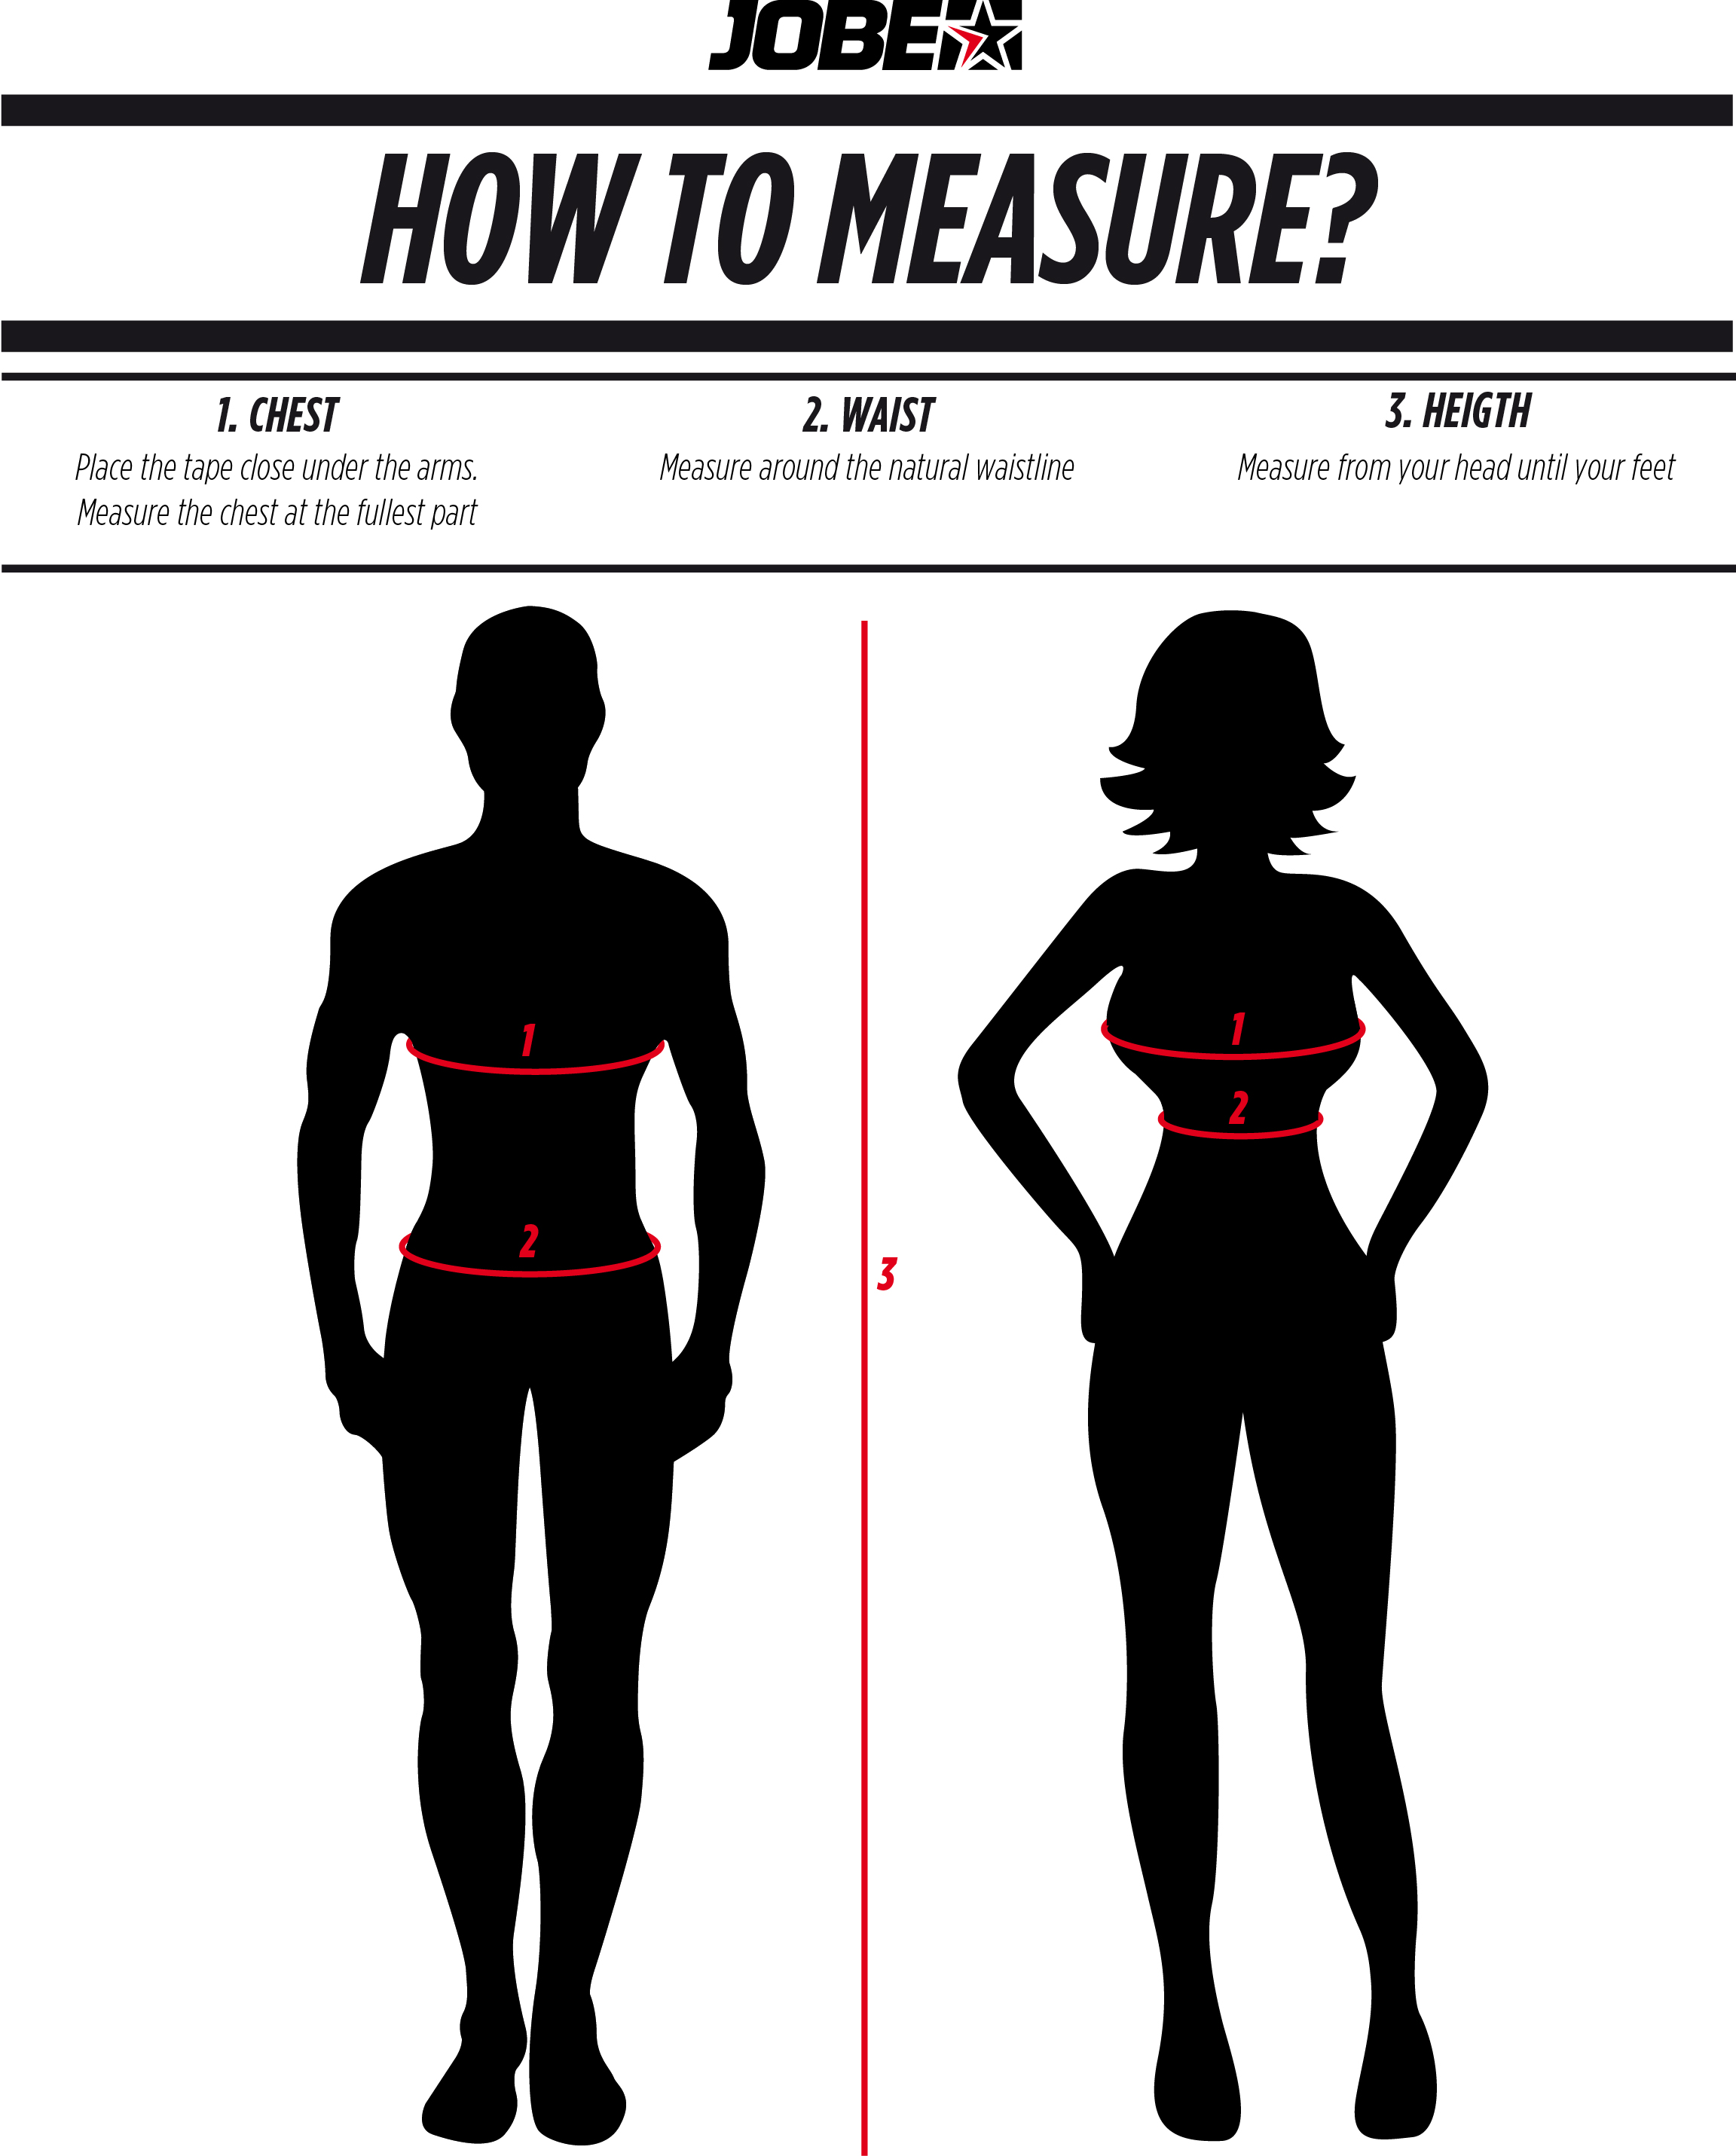 Jobe Instruction: How to Measure?